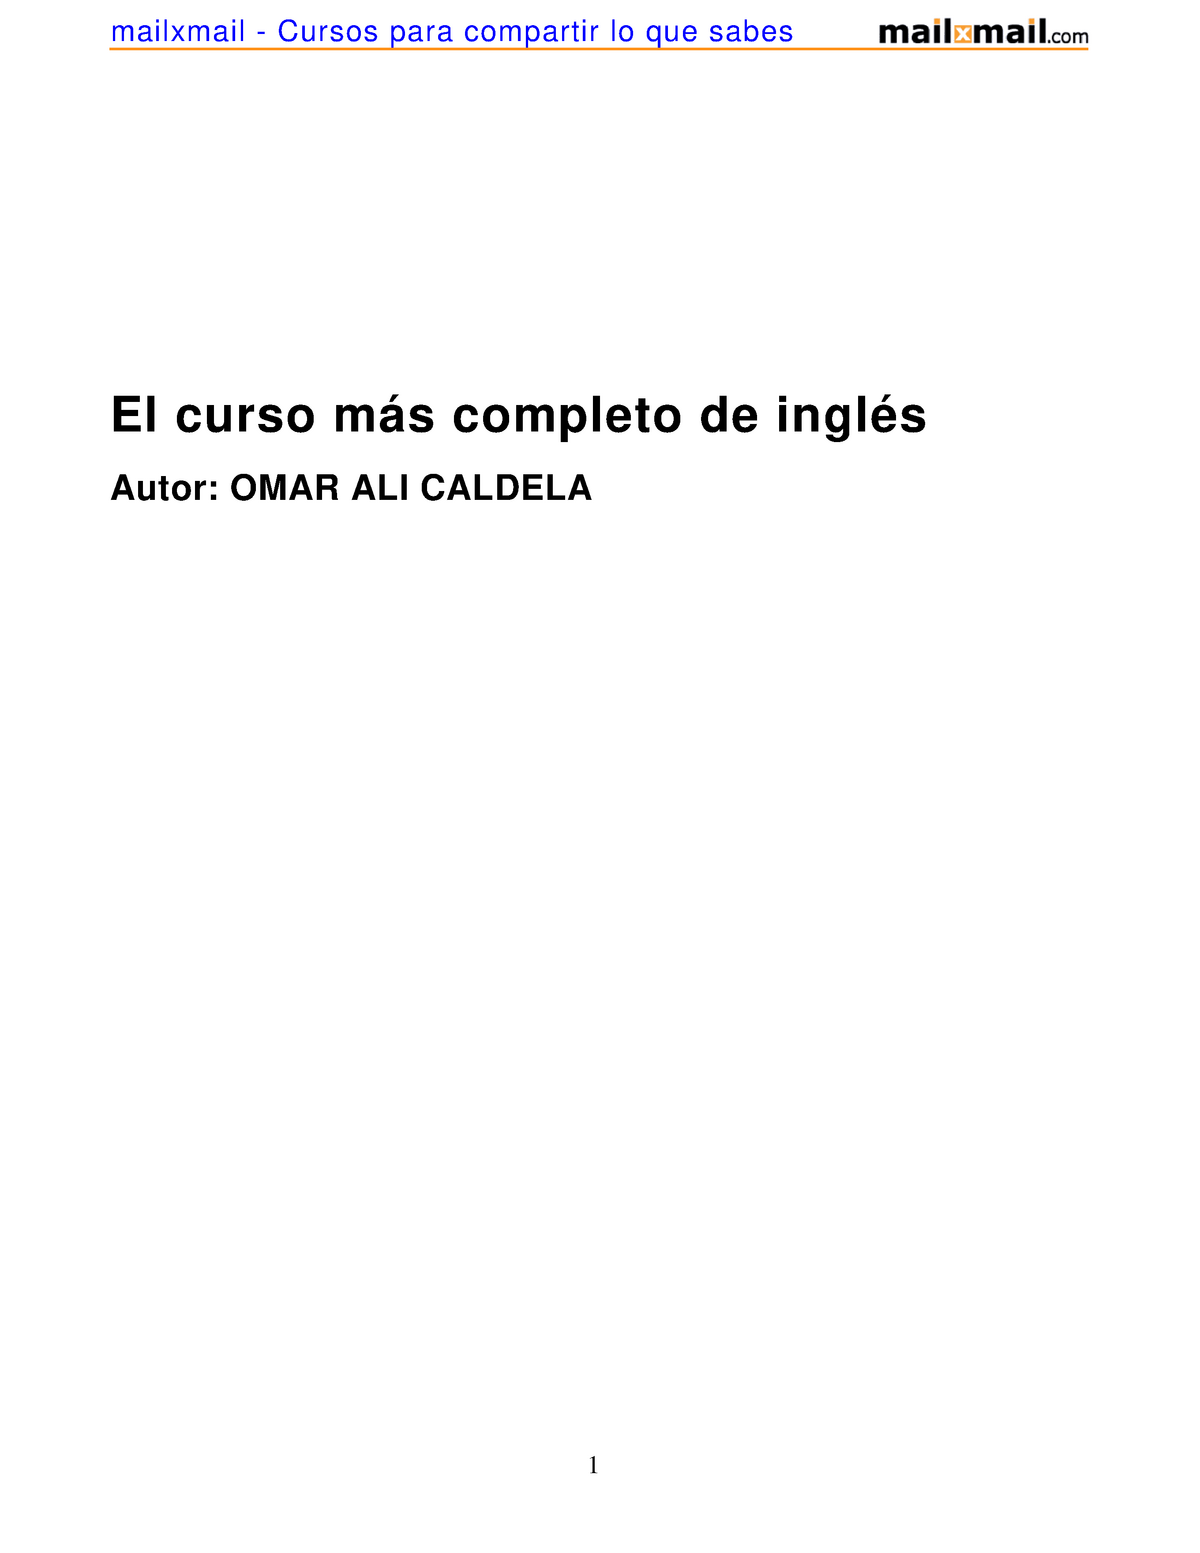 El Mas Completo Ingles 15261 Completo Ingles Uma Studocu